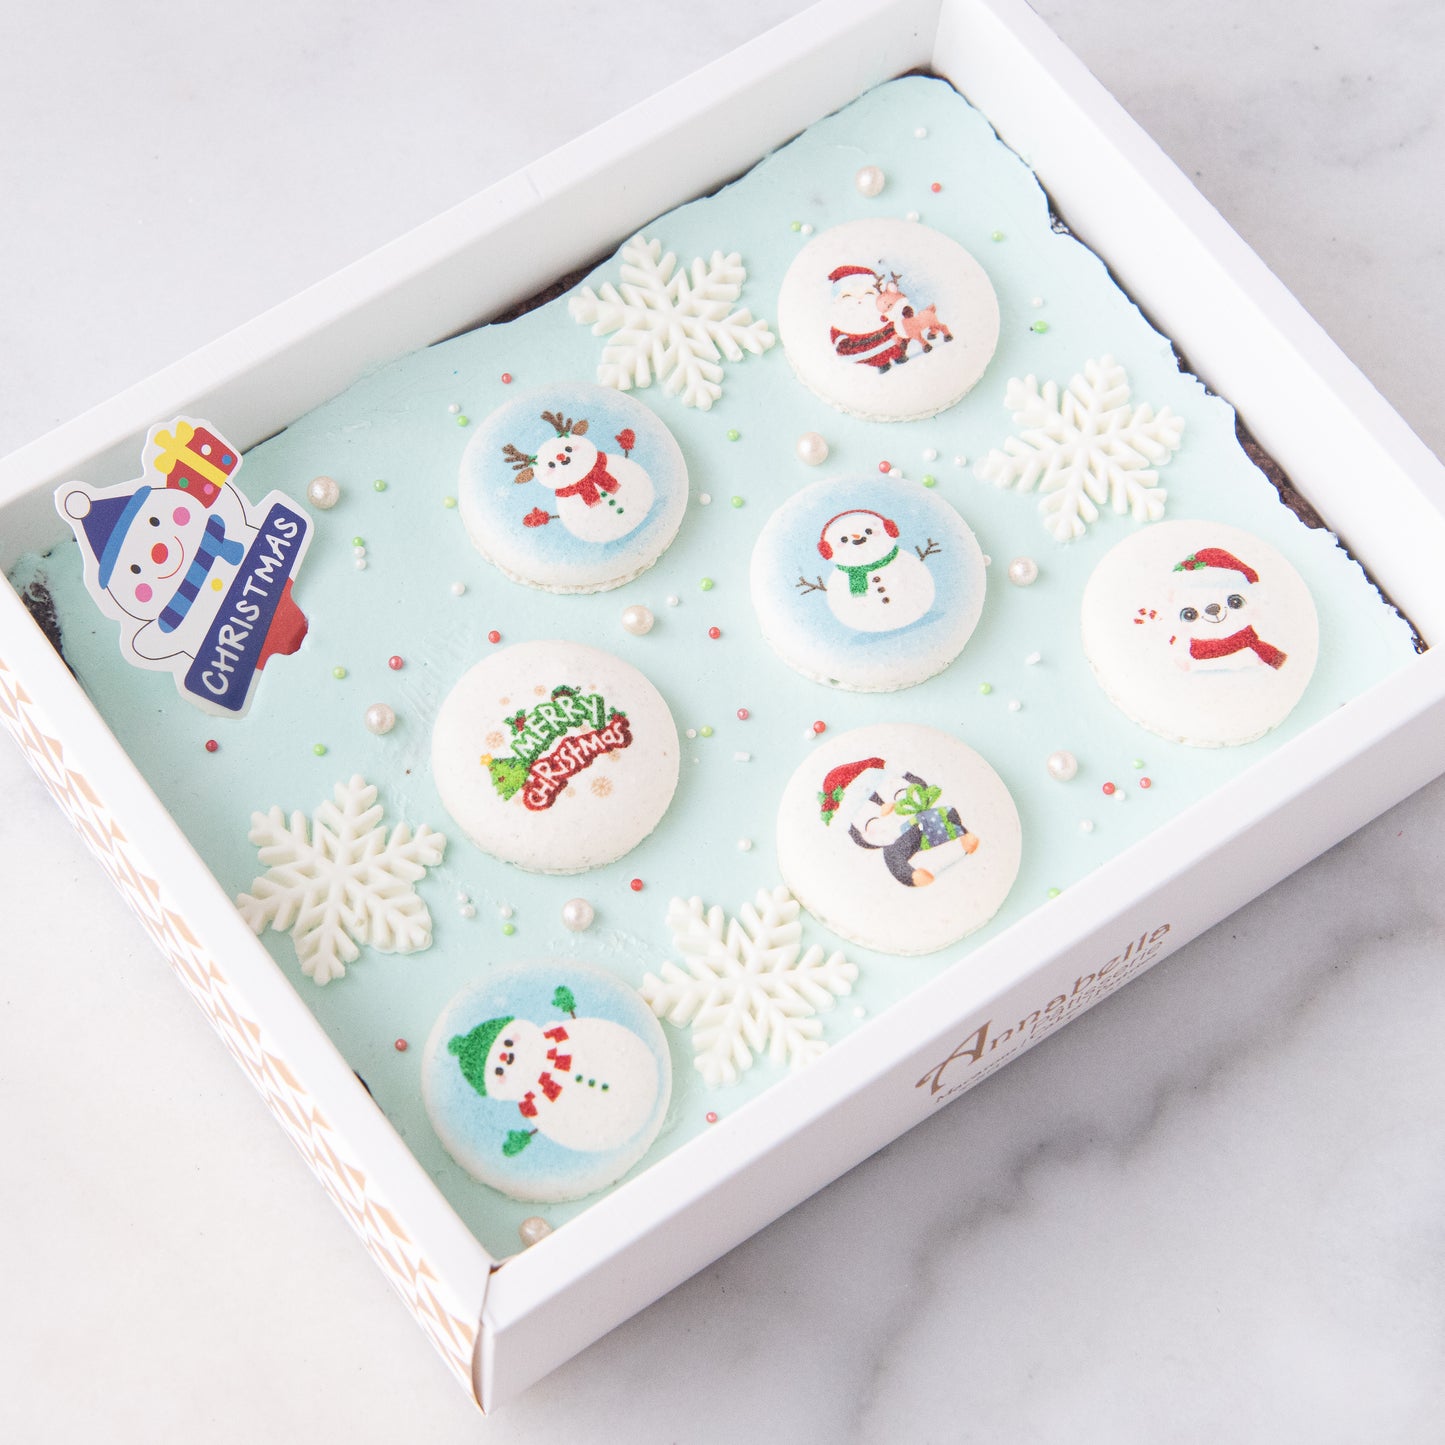 Ho ho ho! | Merry Christmas | A White Christmas brownie upsize | $38.80 Nett only